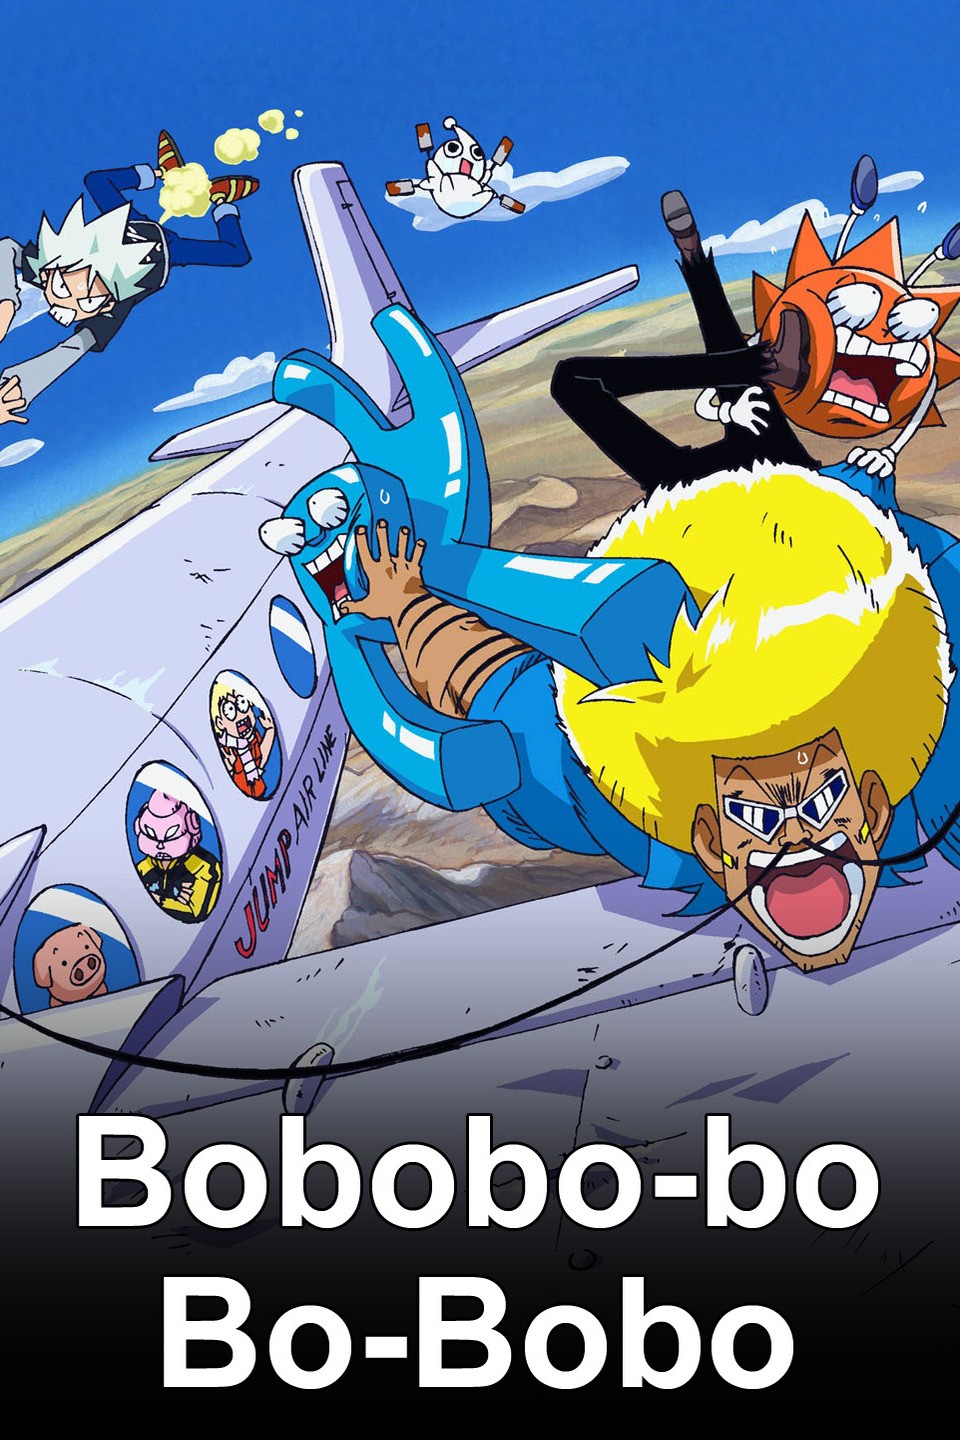 Bobobo-bo Bo-bobo Episodes 1-10: The Bobobo-a-thon I | Audio Only  Commentary - YouTube